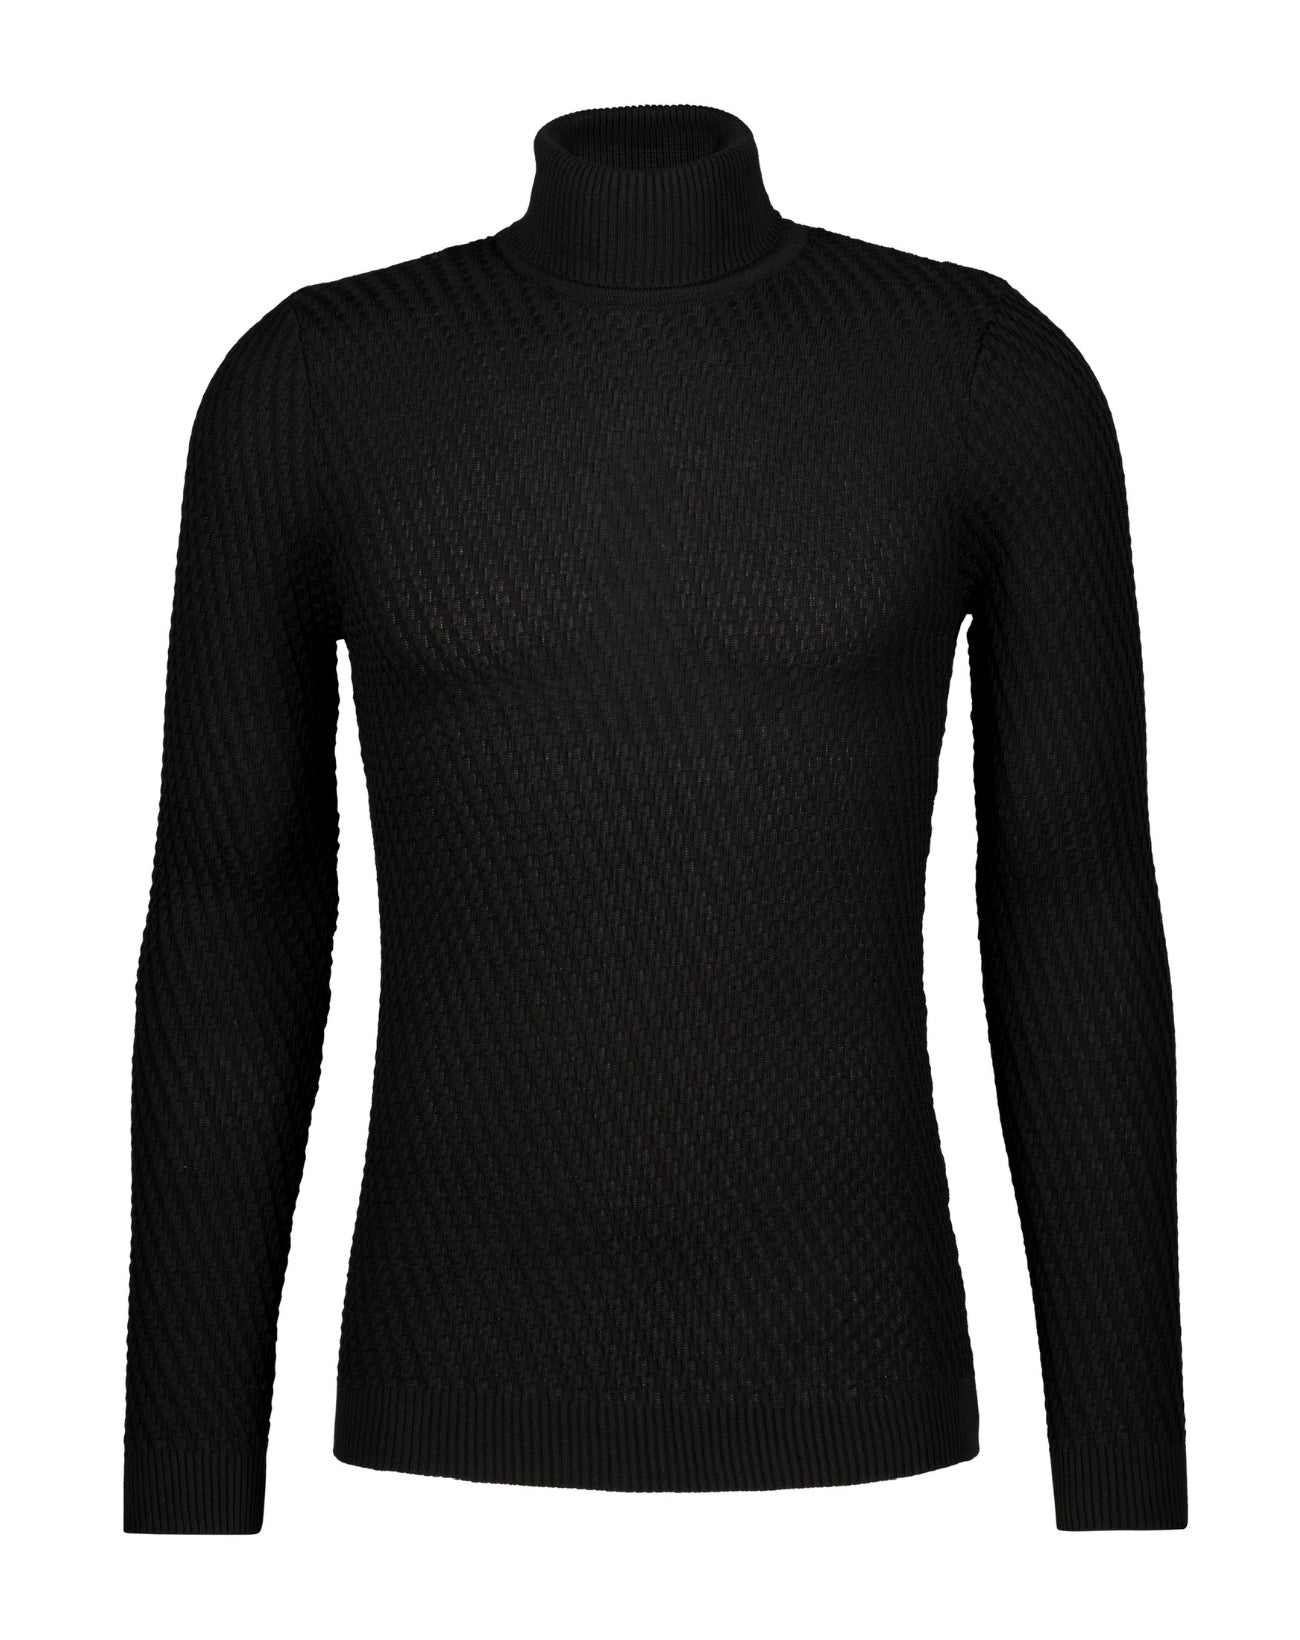 Textured Knit Turtleneck Sweater -  Black - Sweater by Urbbana